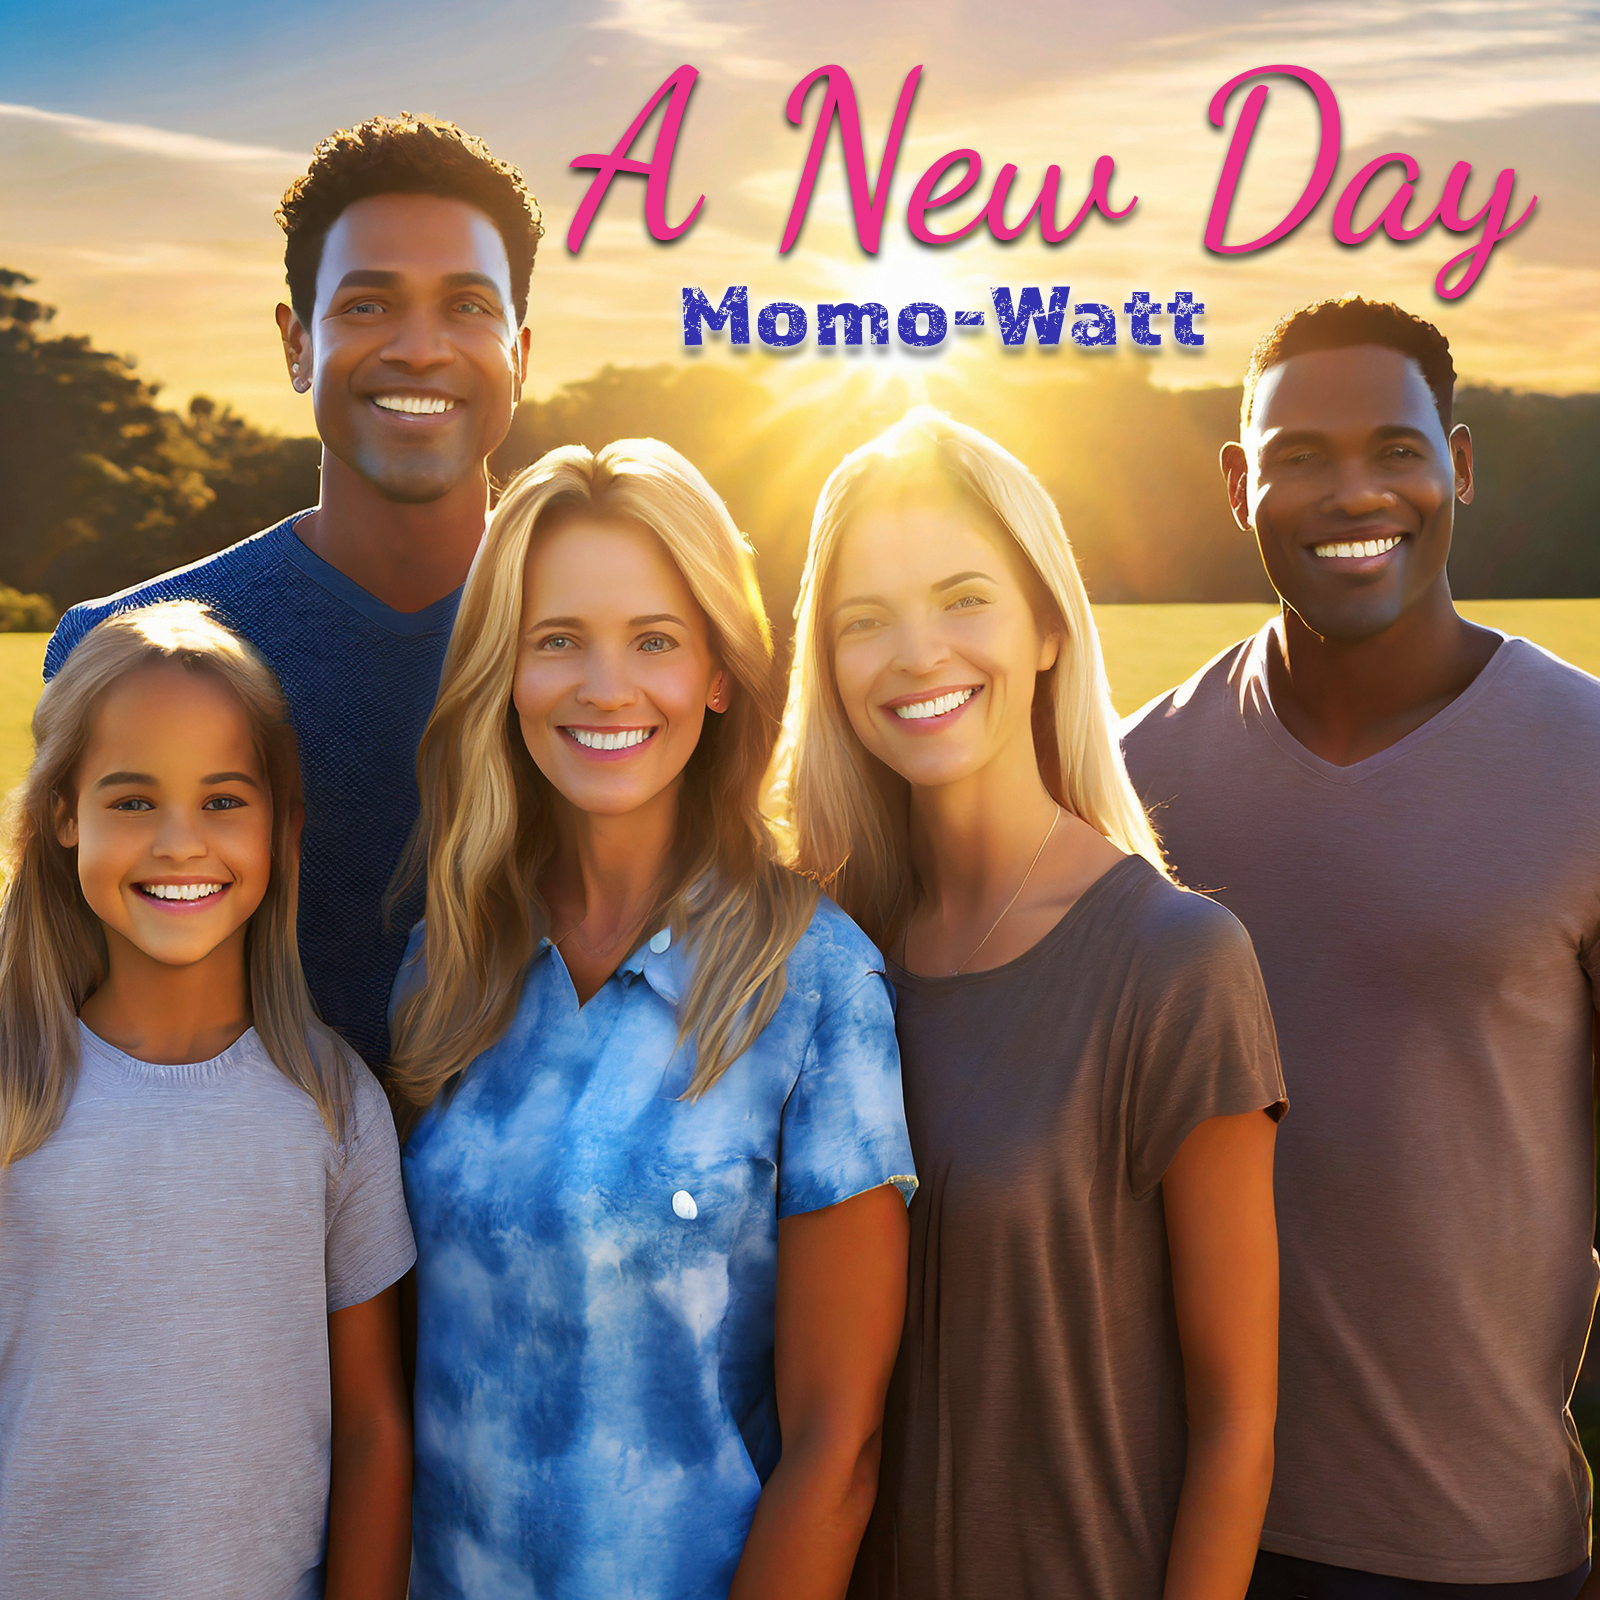 A New Day by Momo-Watt